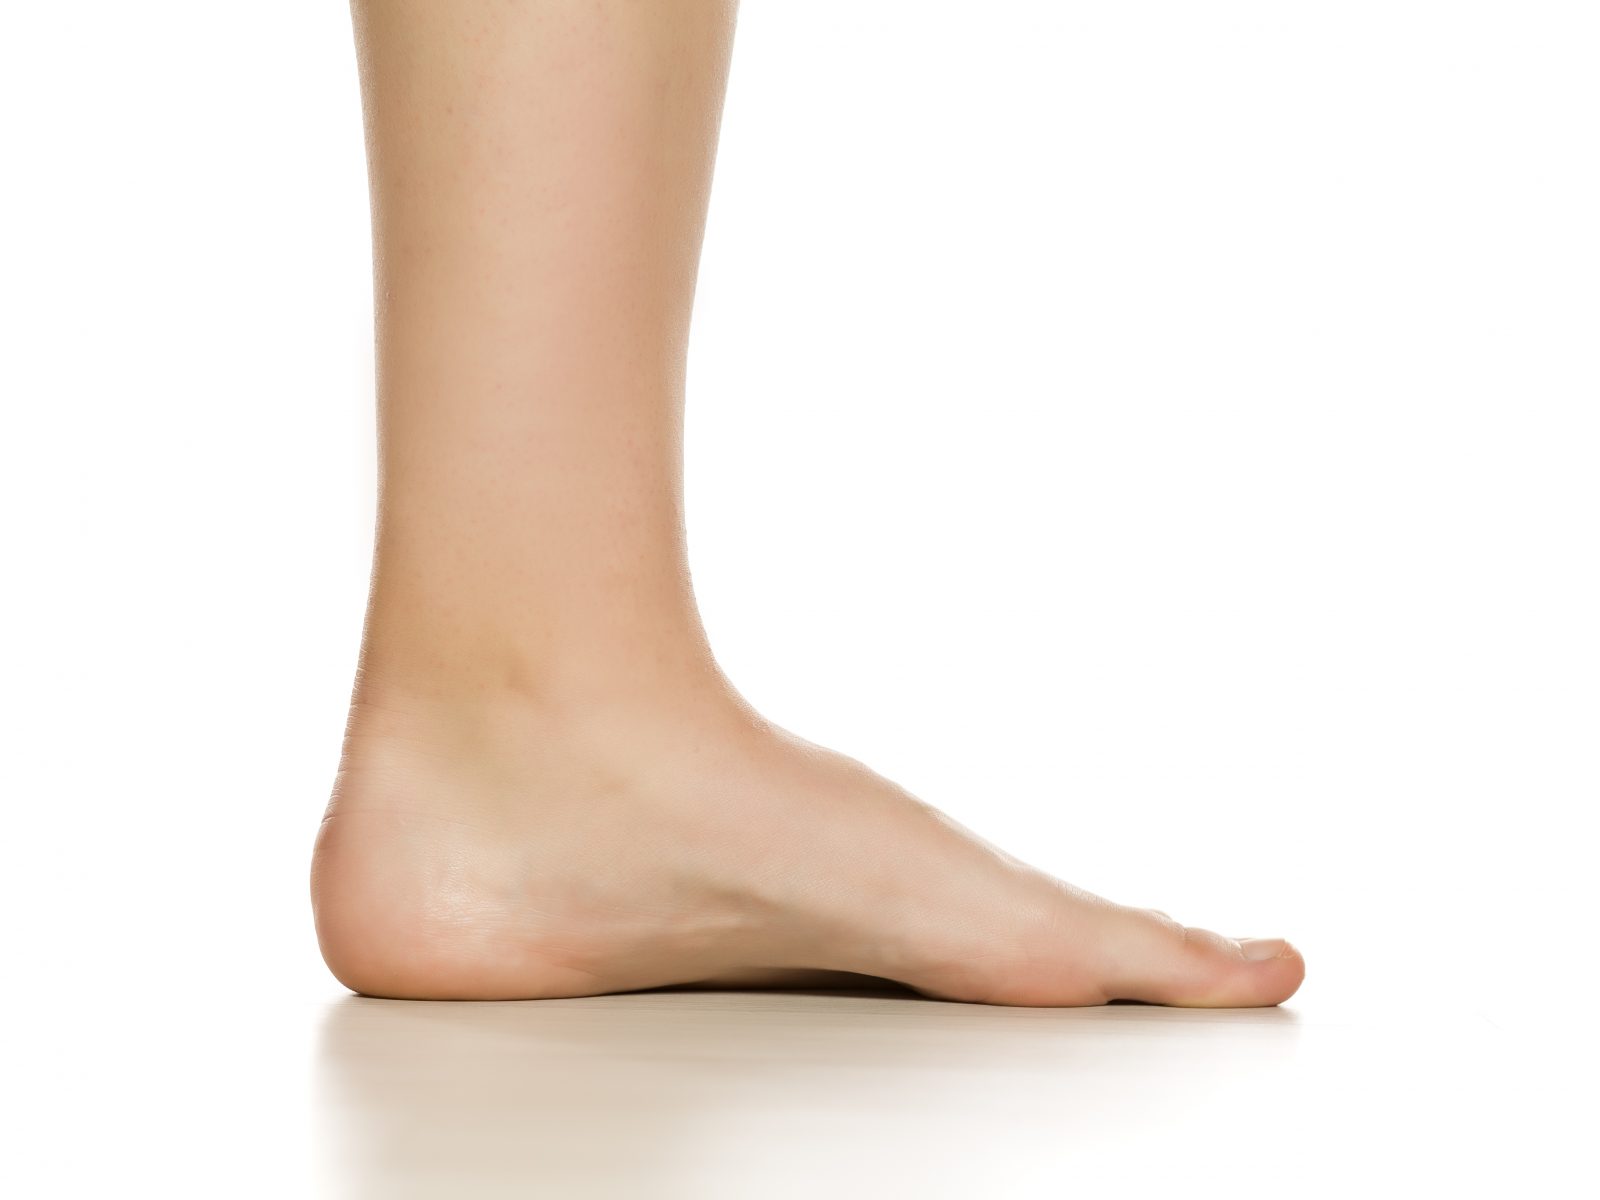 Foot side. Стопа вид сбоку. Женская нога сбоку. Женская стопа вид сбоку. Стопы ног 3д.